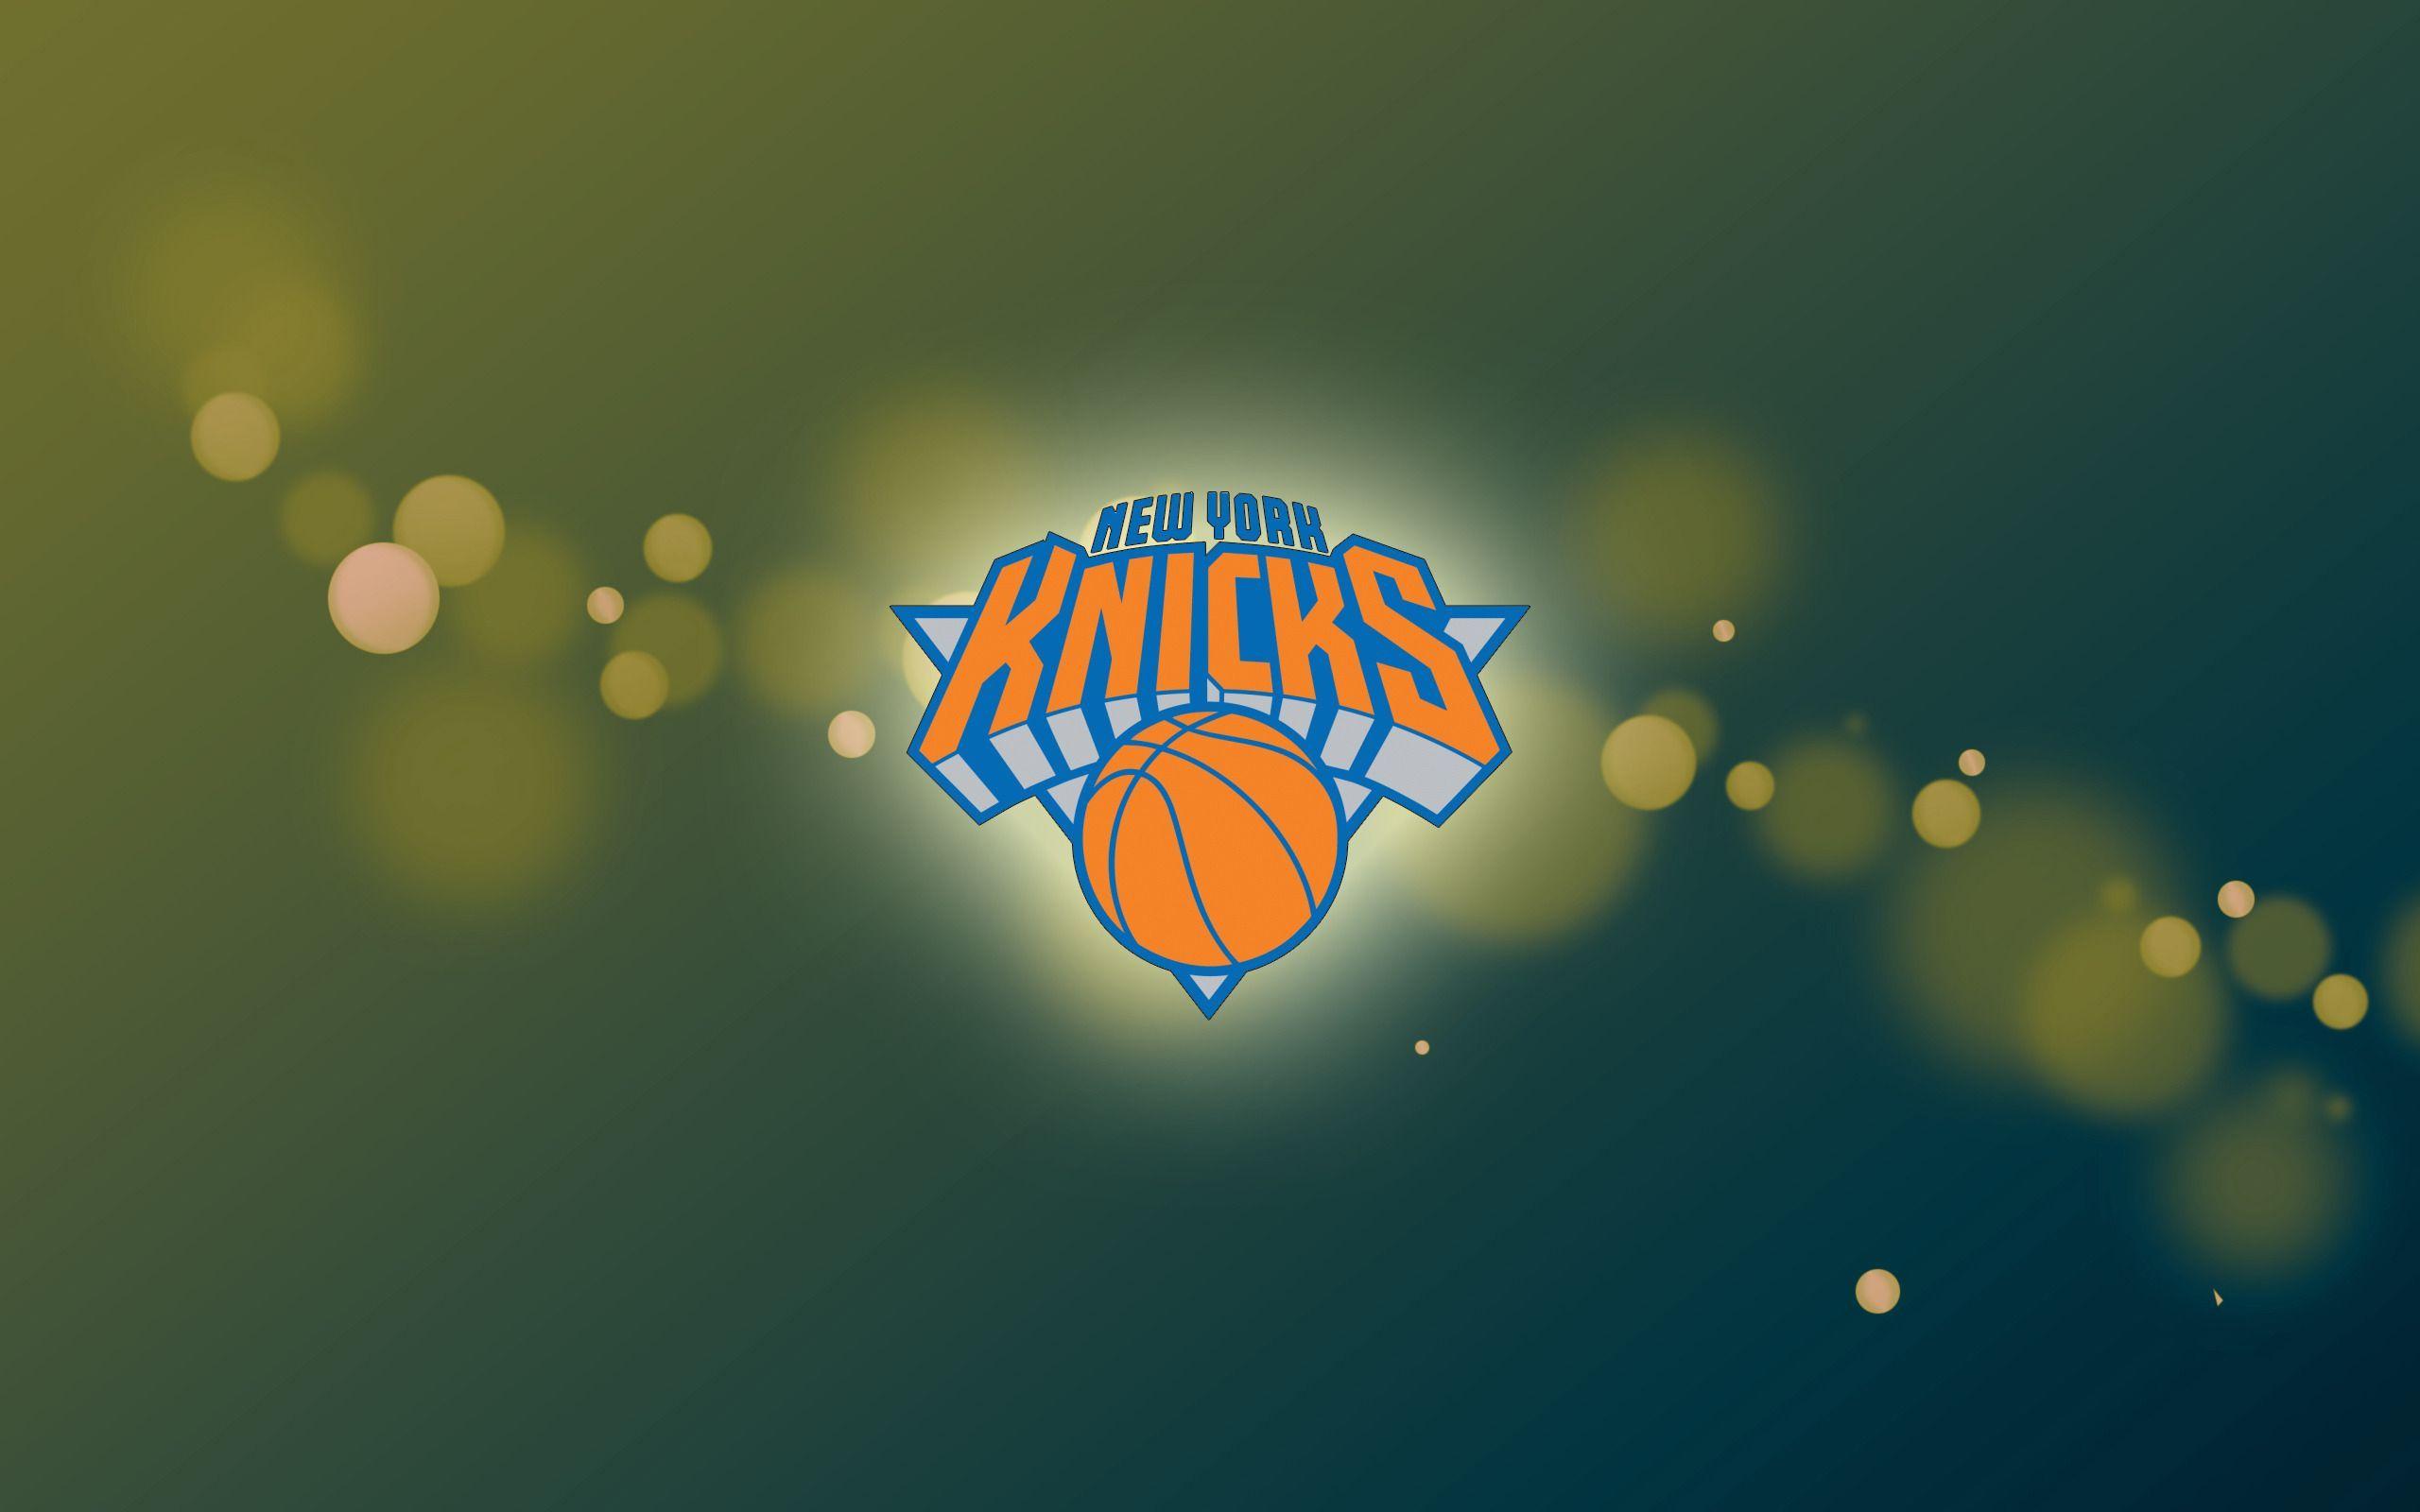 NBA Team Logos Wallpapers 2016 - Wallpaper Cave2560 x 1600